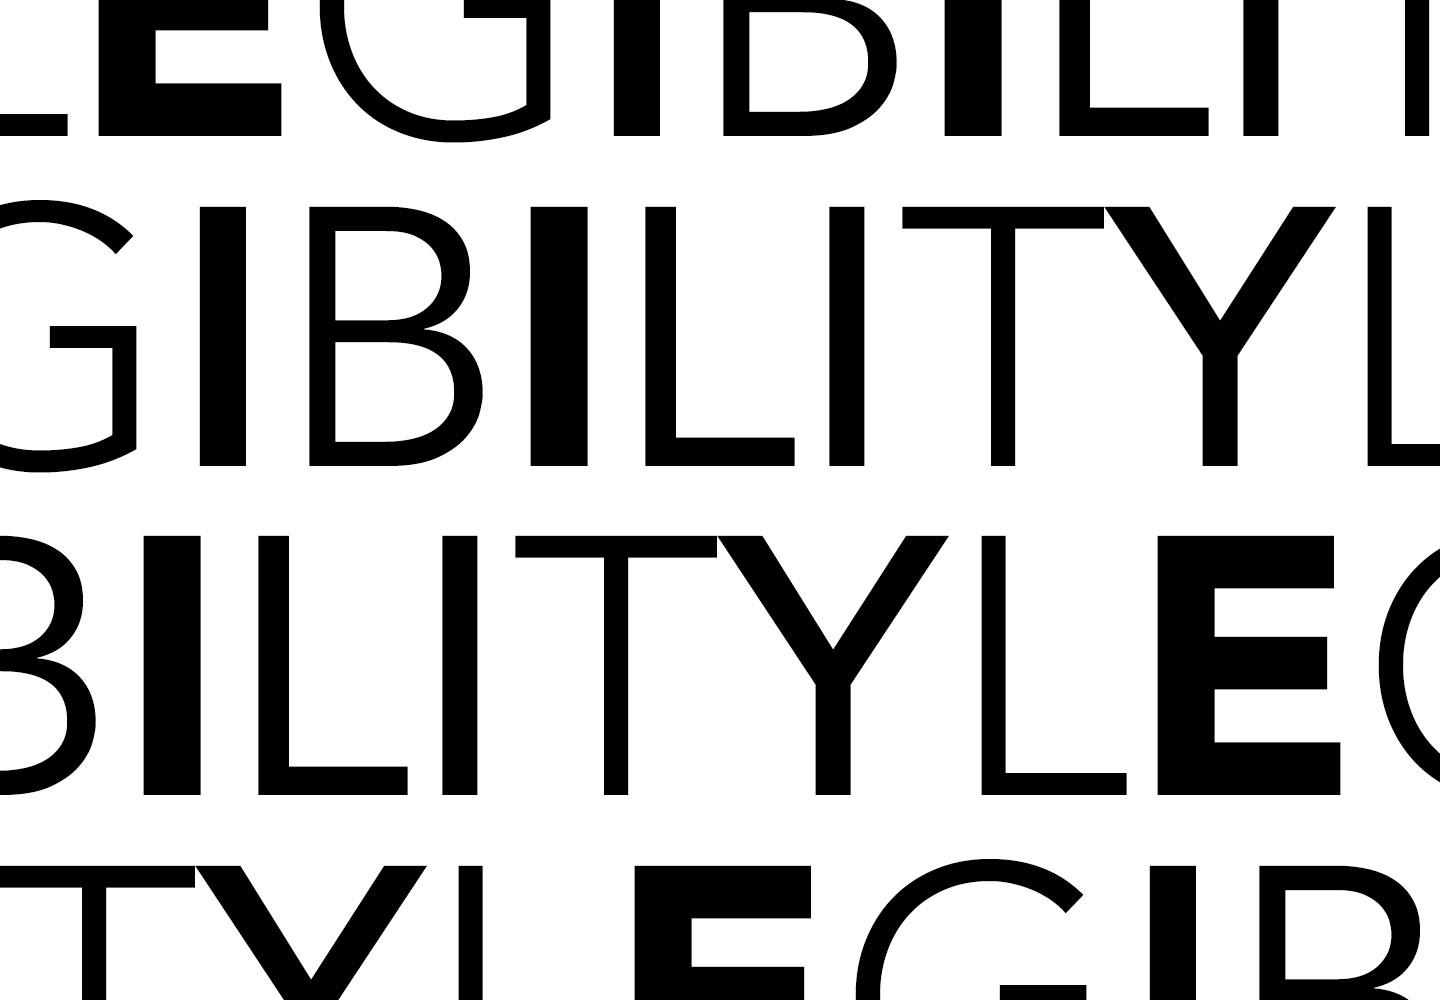 logo design principles - legibility